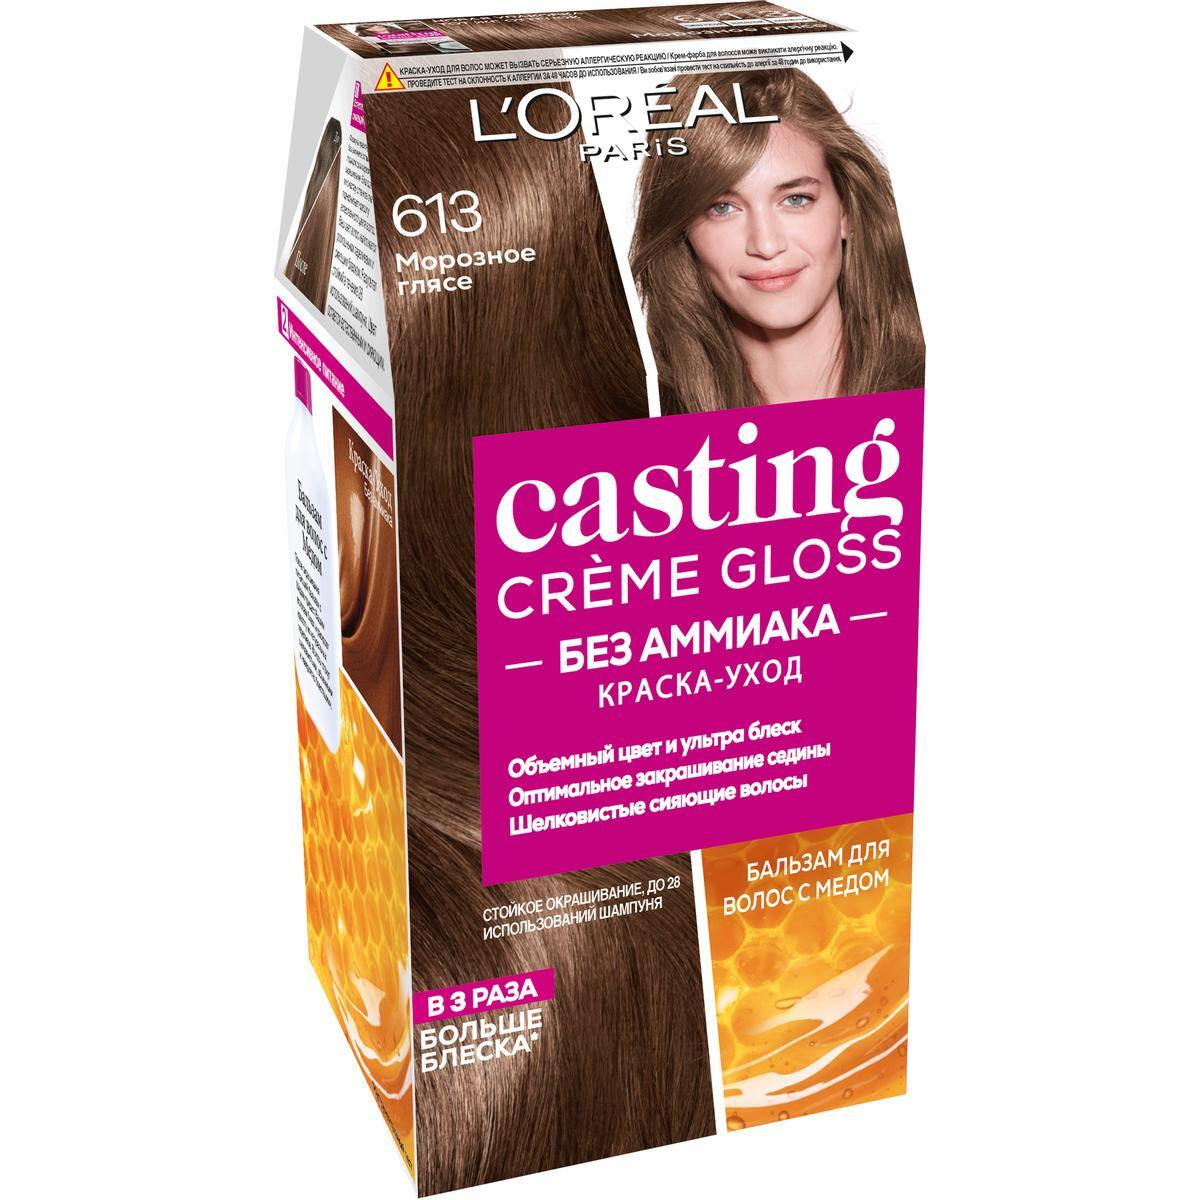 L'Oreal Paris Стойкая краска-уход для волос Casting Creme Gloss без аммиака, оттенок 613, Морозное глясе #1